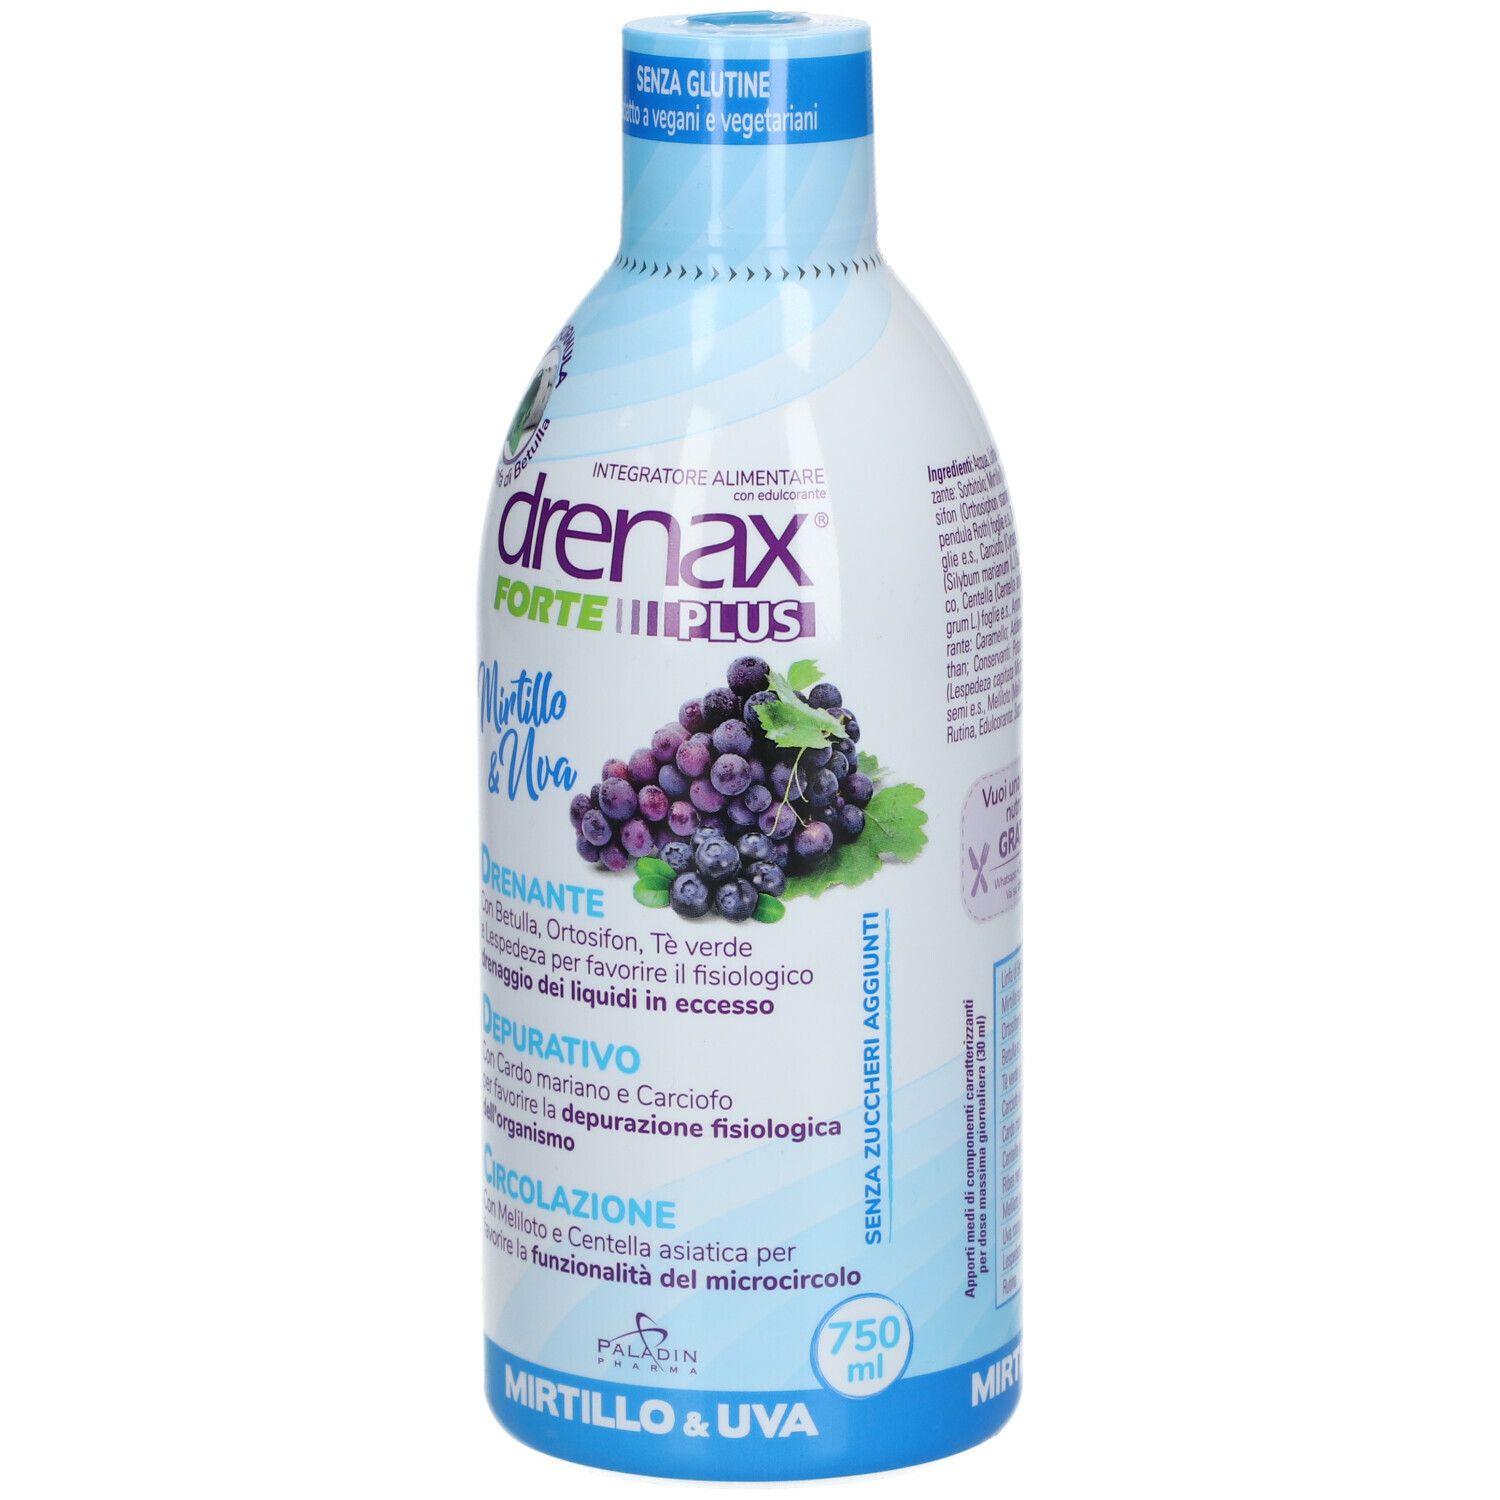 Drenax® Forte Plus Mirtillo & Uva 750 ml